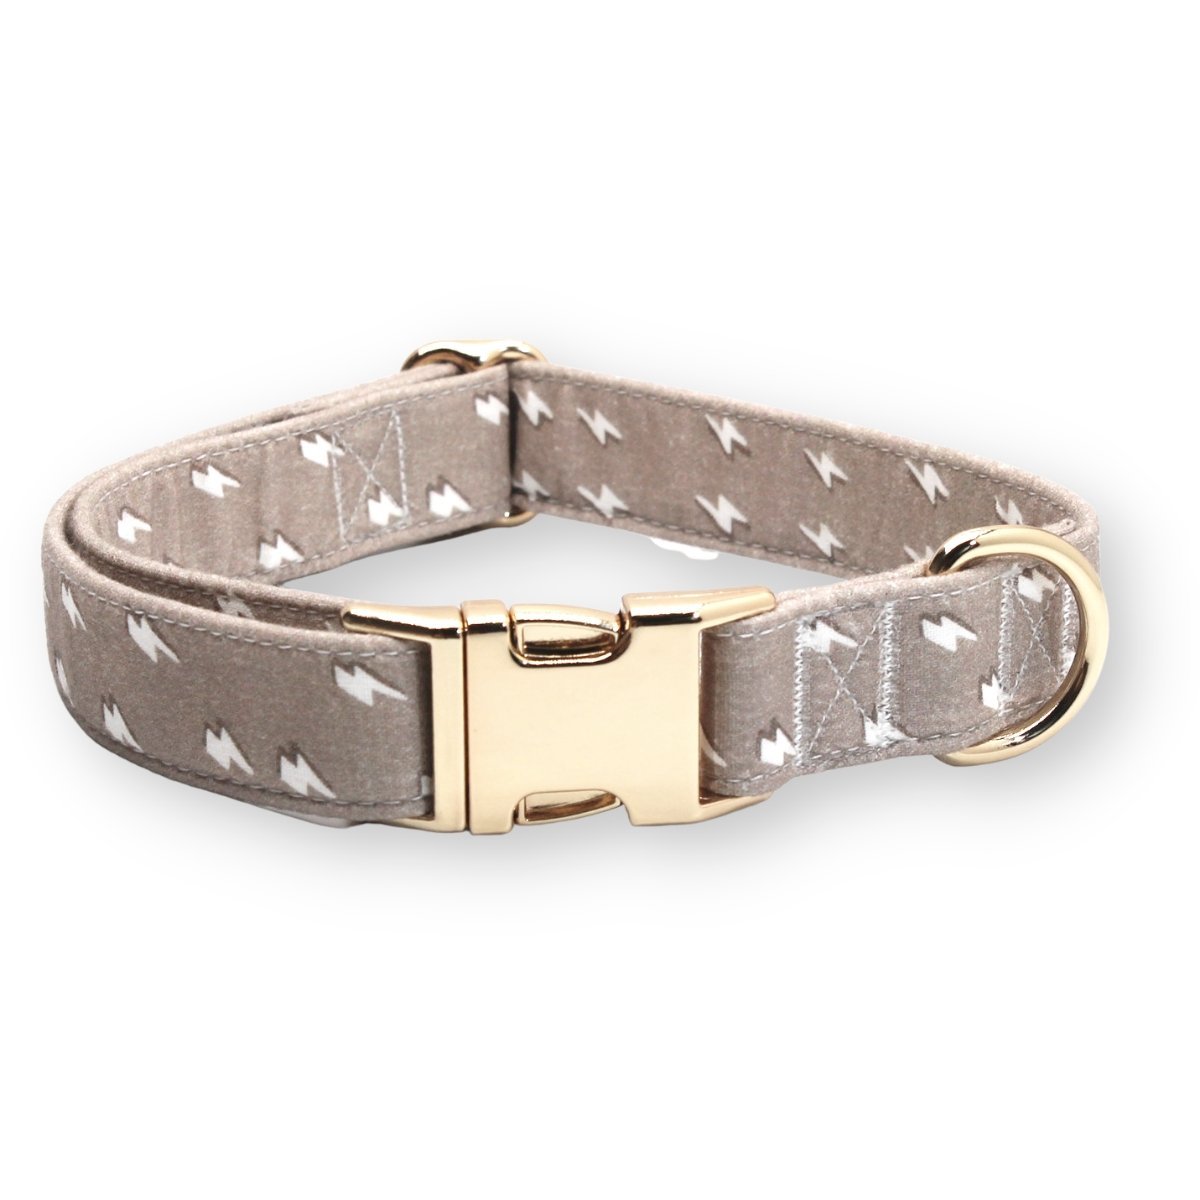 Customized dog bow tie  collars - dog bow tie collar  large